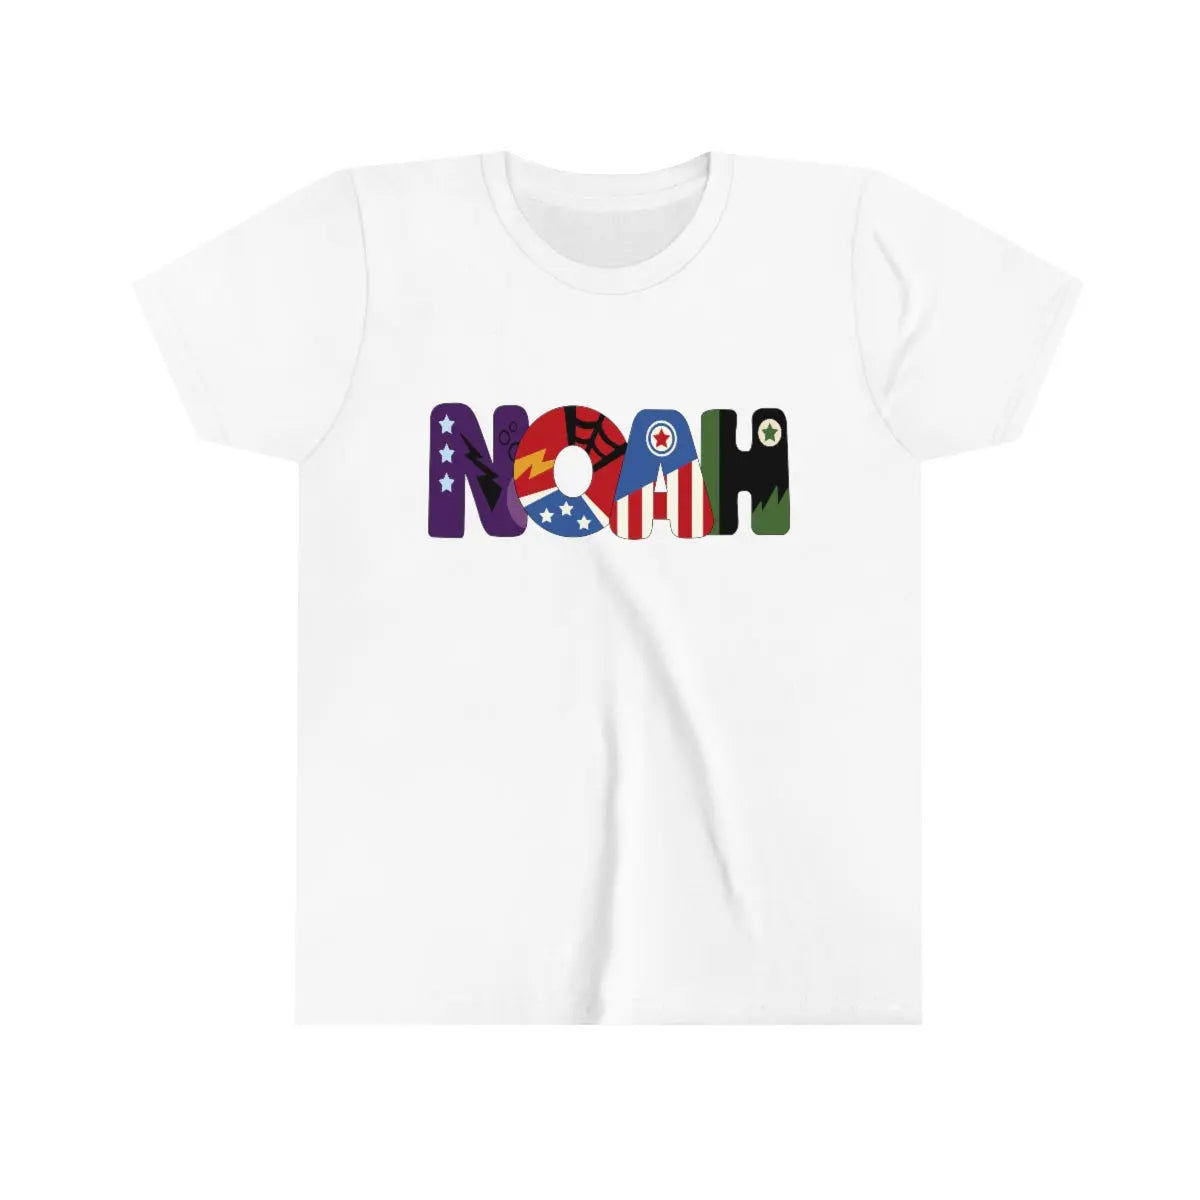 Superhero Personalized Youth Child's T-shirt S M L XL | Kid's Birthday Gift Printify